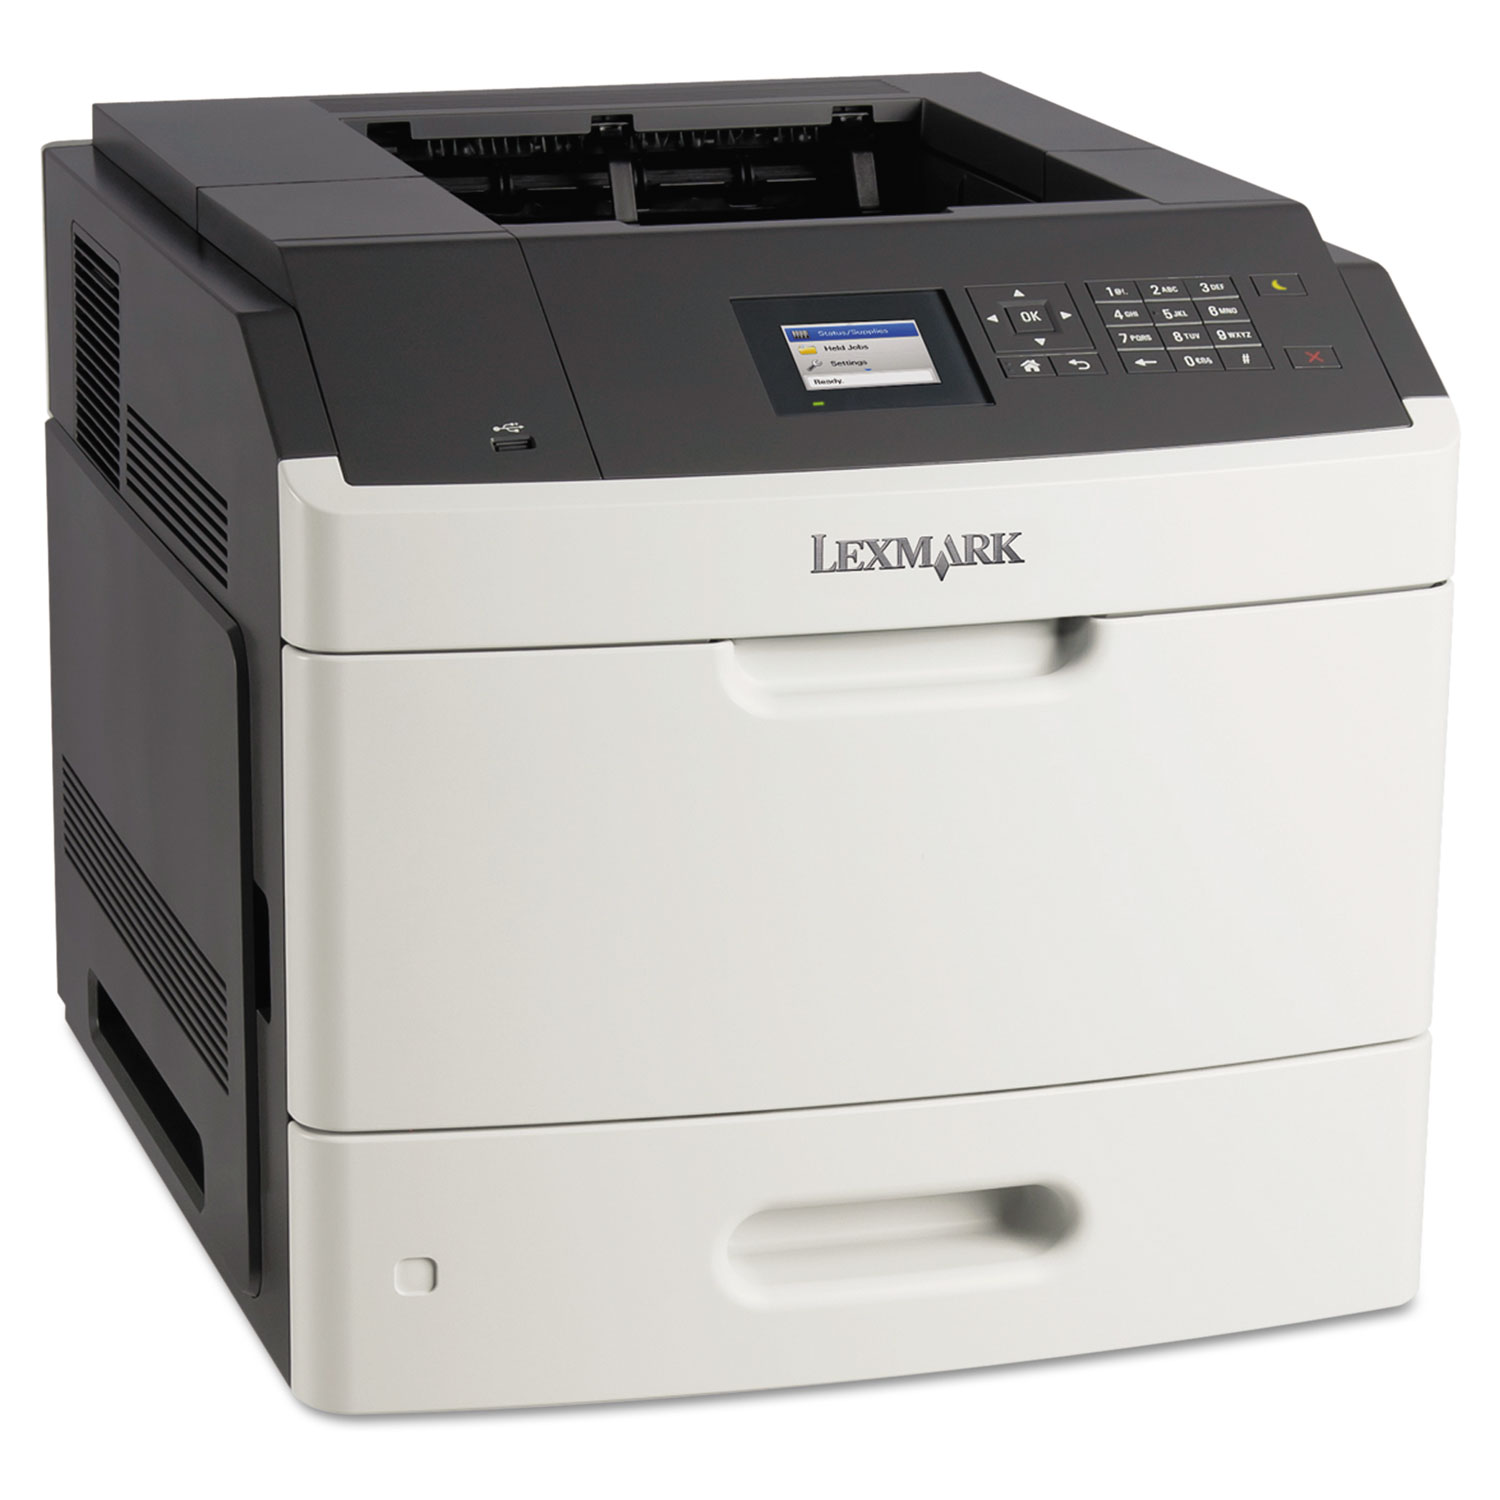 MS811n Laser Printer